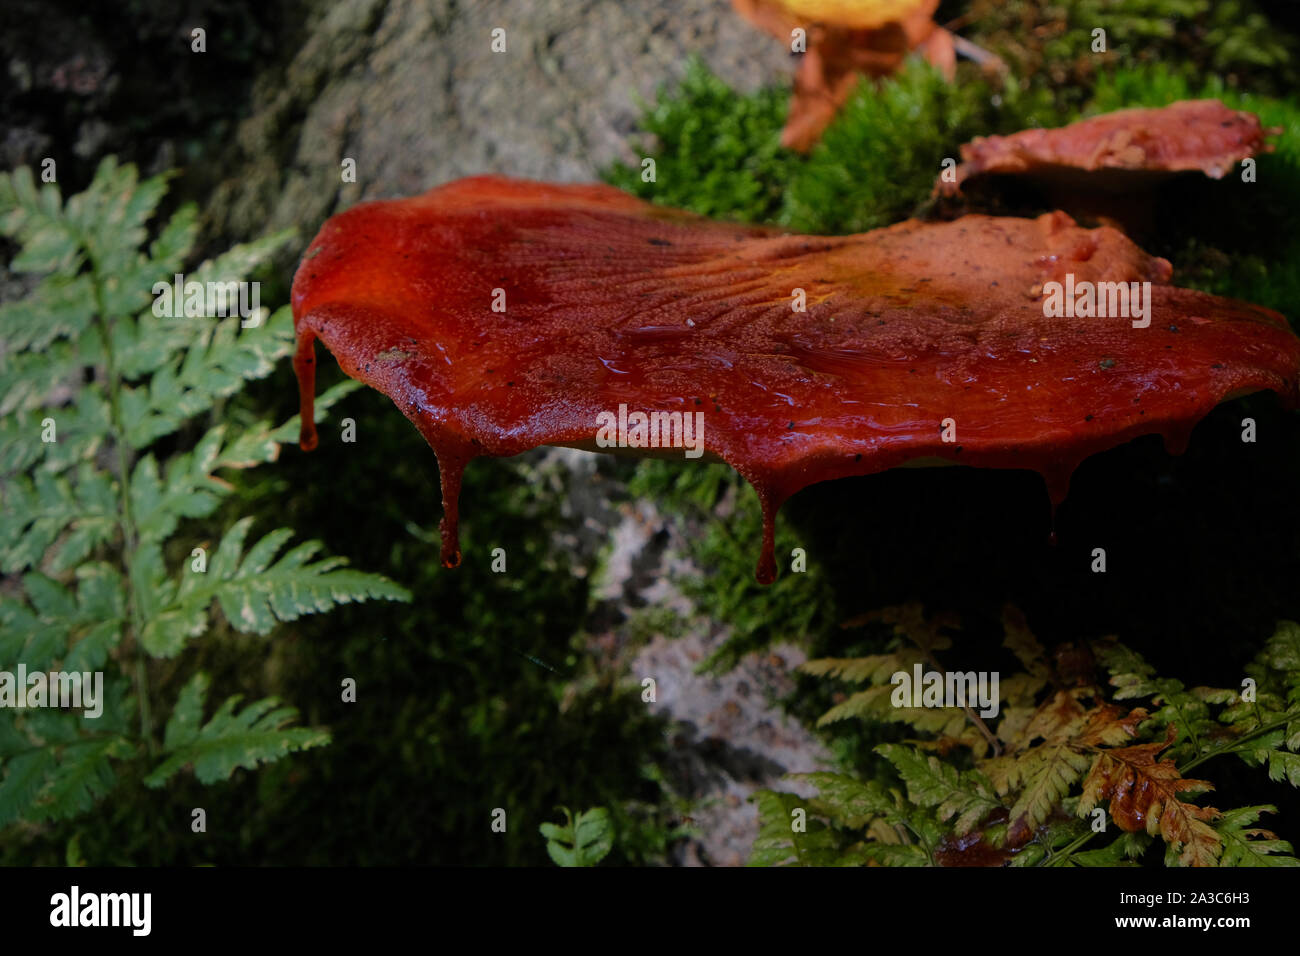 Beafsteak fungus mushroom growing on a tree bark in the Forest in Bergen Noord-Holland Stock Photo